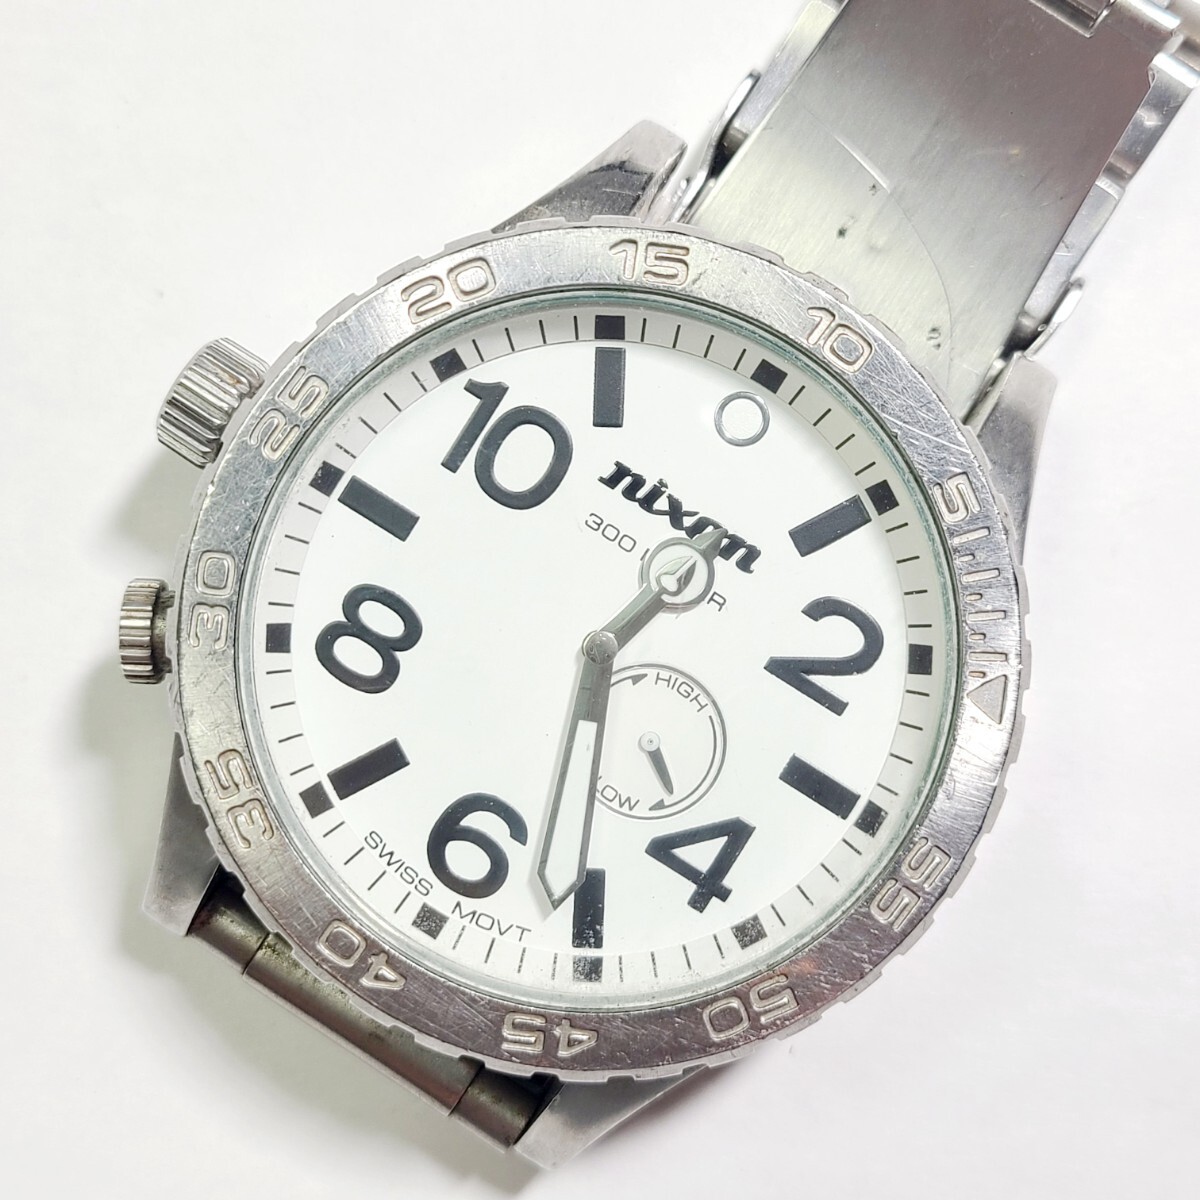 CM11LL NIXON ニクソン 腕時計 SIMPLIFY THE 51-30 51mmビッグフェイス 30気圧防水 高性能 リストウォッチ クォーツ ホワイト文字盤の画像1